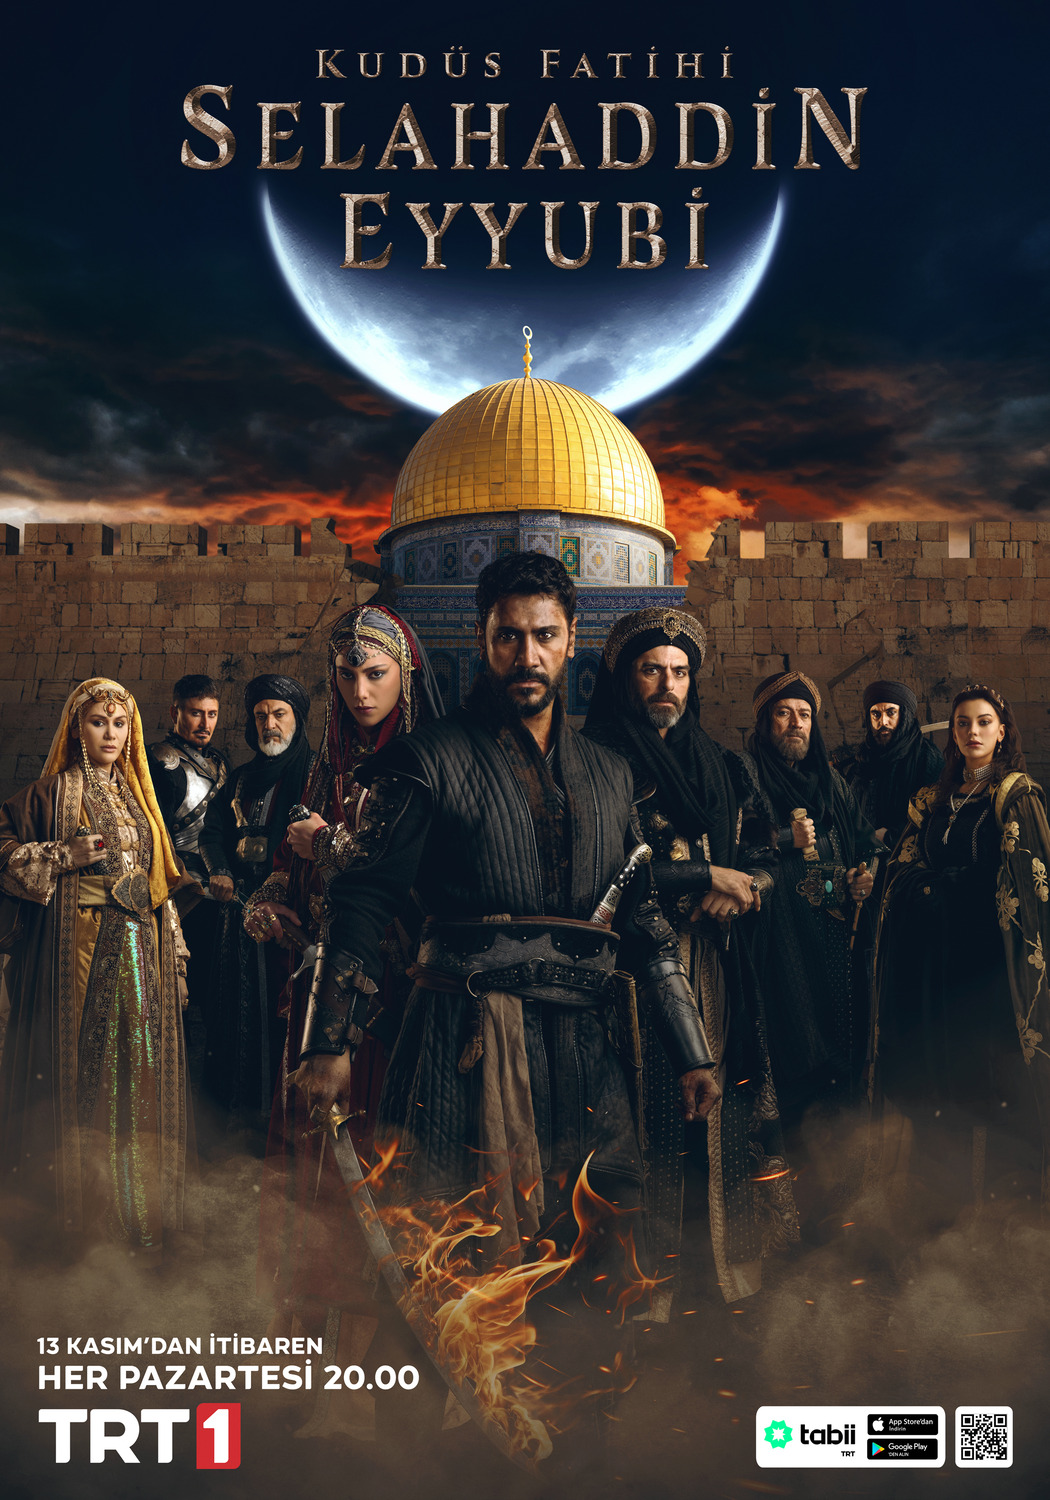 Extra Large TV Poster Image for Kudüs Fatihi: Selahaddin Eyyubi (#1 of 4)